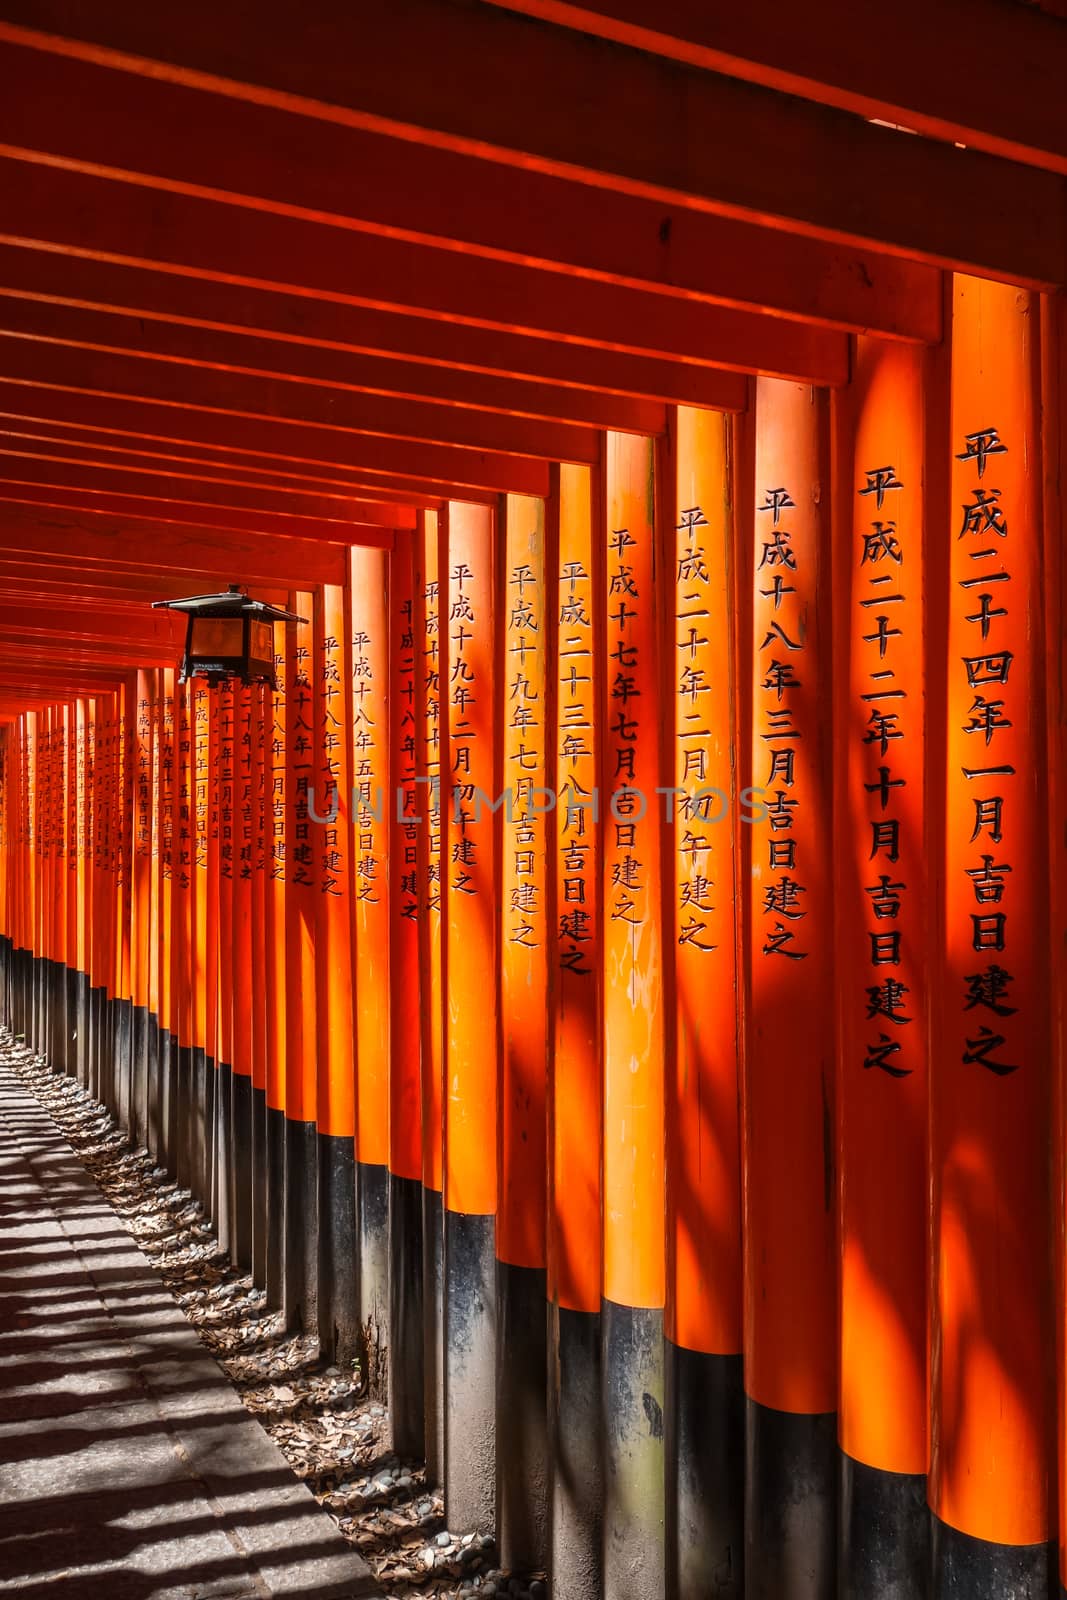 Lantern in Fushimi Inari Taisha shrine, Kyoto, Japan by daboost